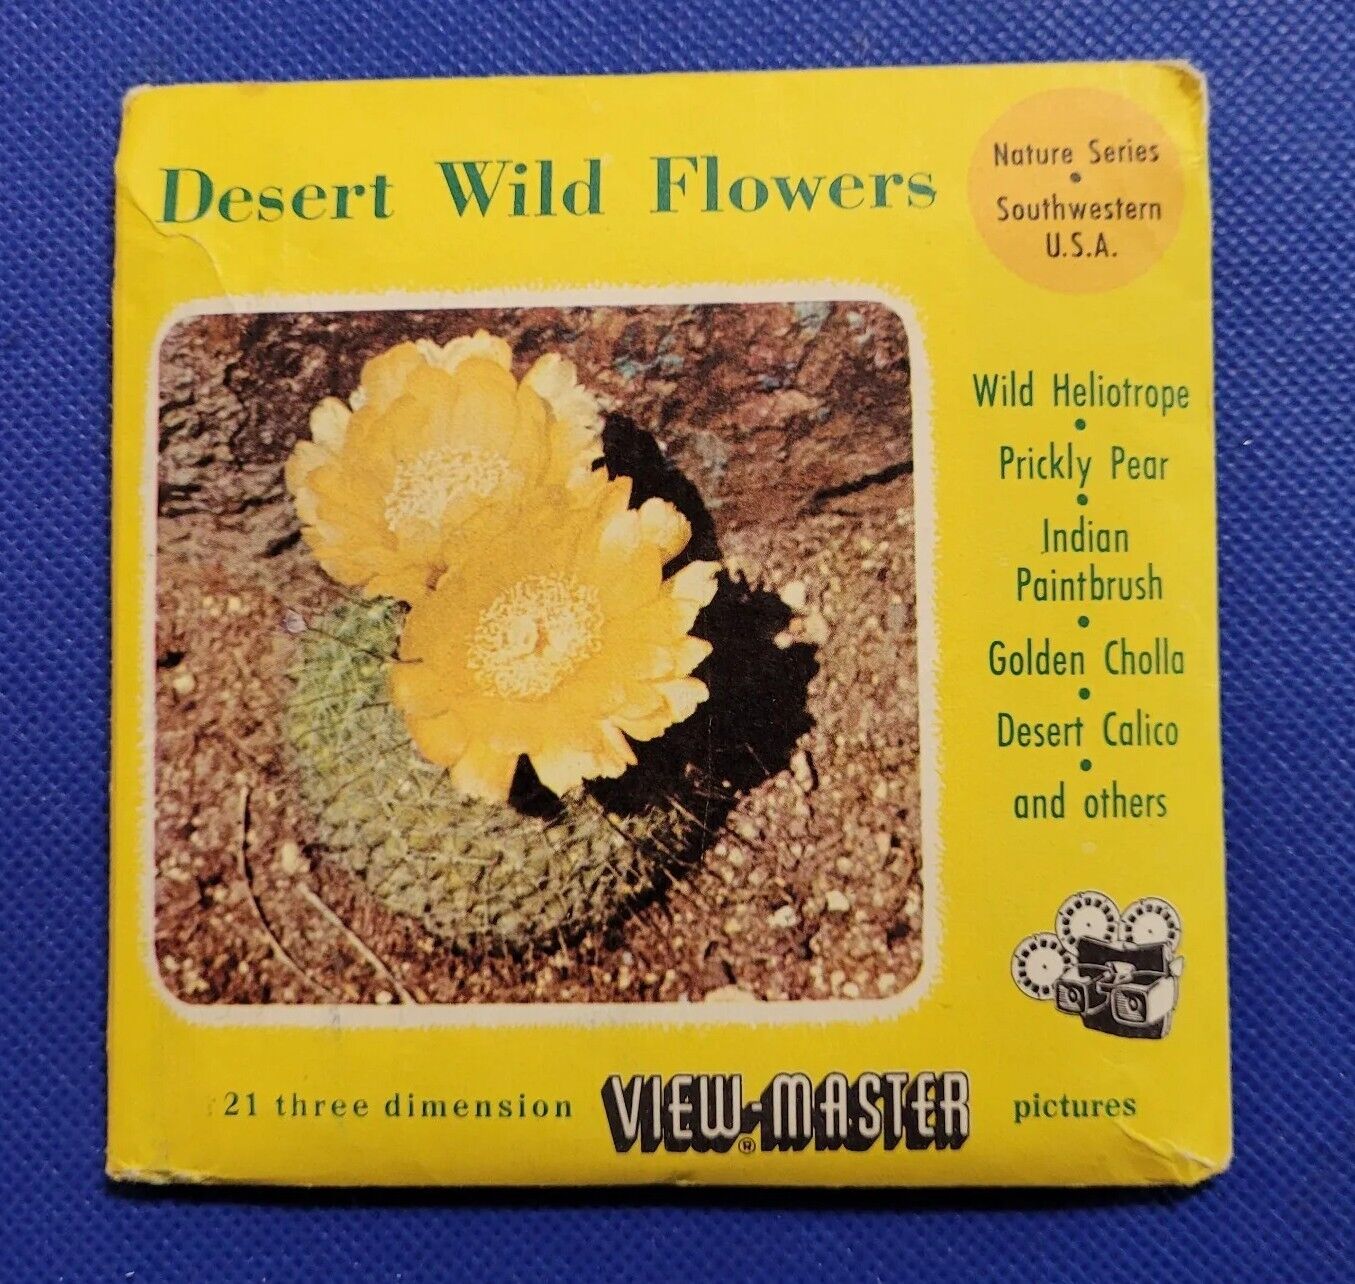 B629 Desert Wild flowers Wildflowers Southwestern USA view-master 3 reels packet